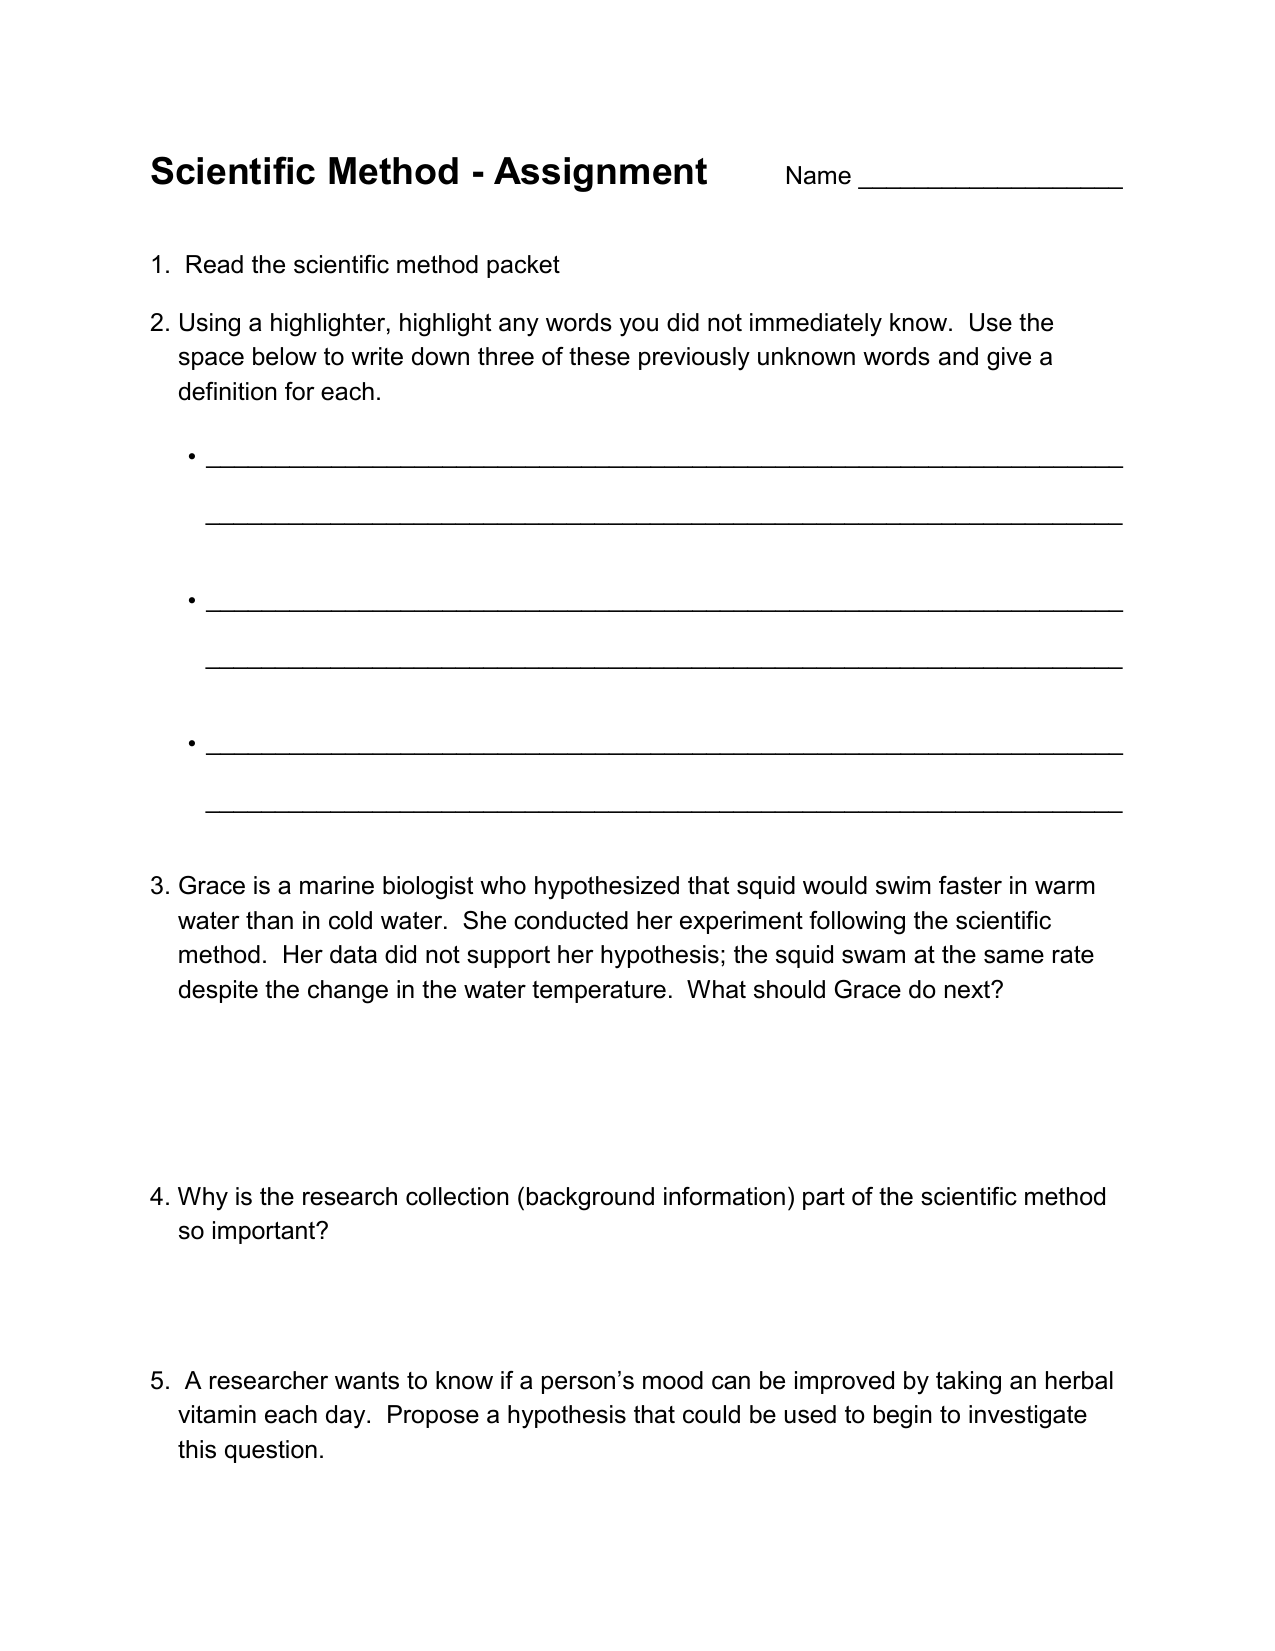 peer graded assignment scientific method writing assignment (creative)